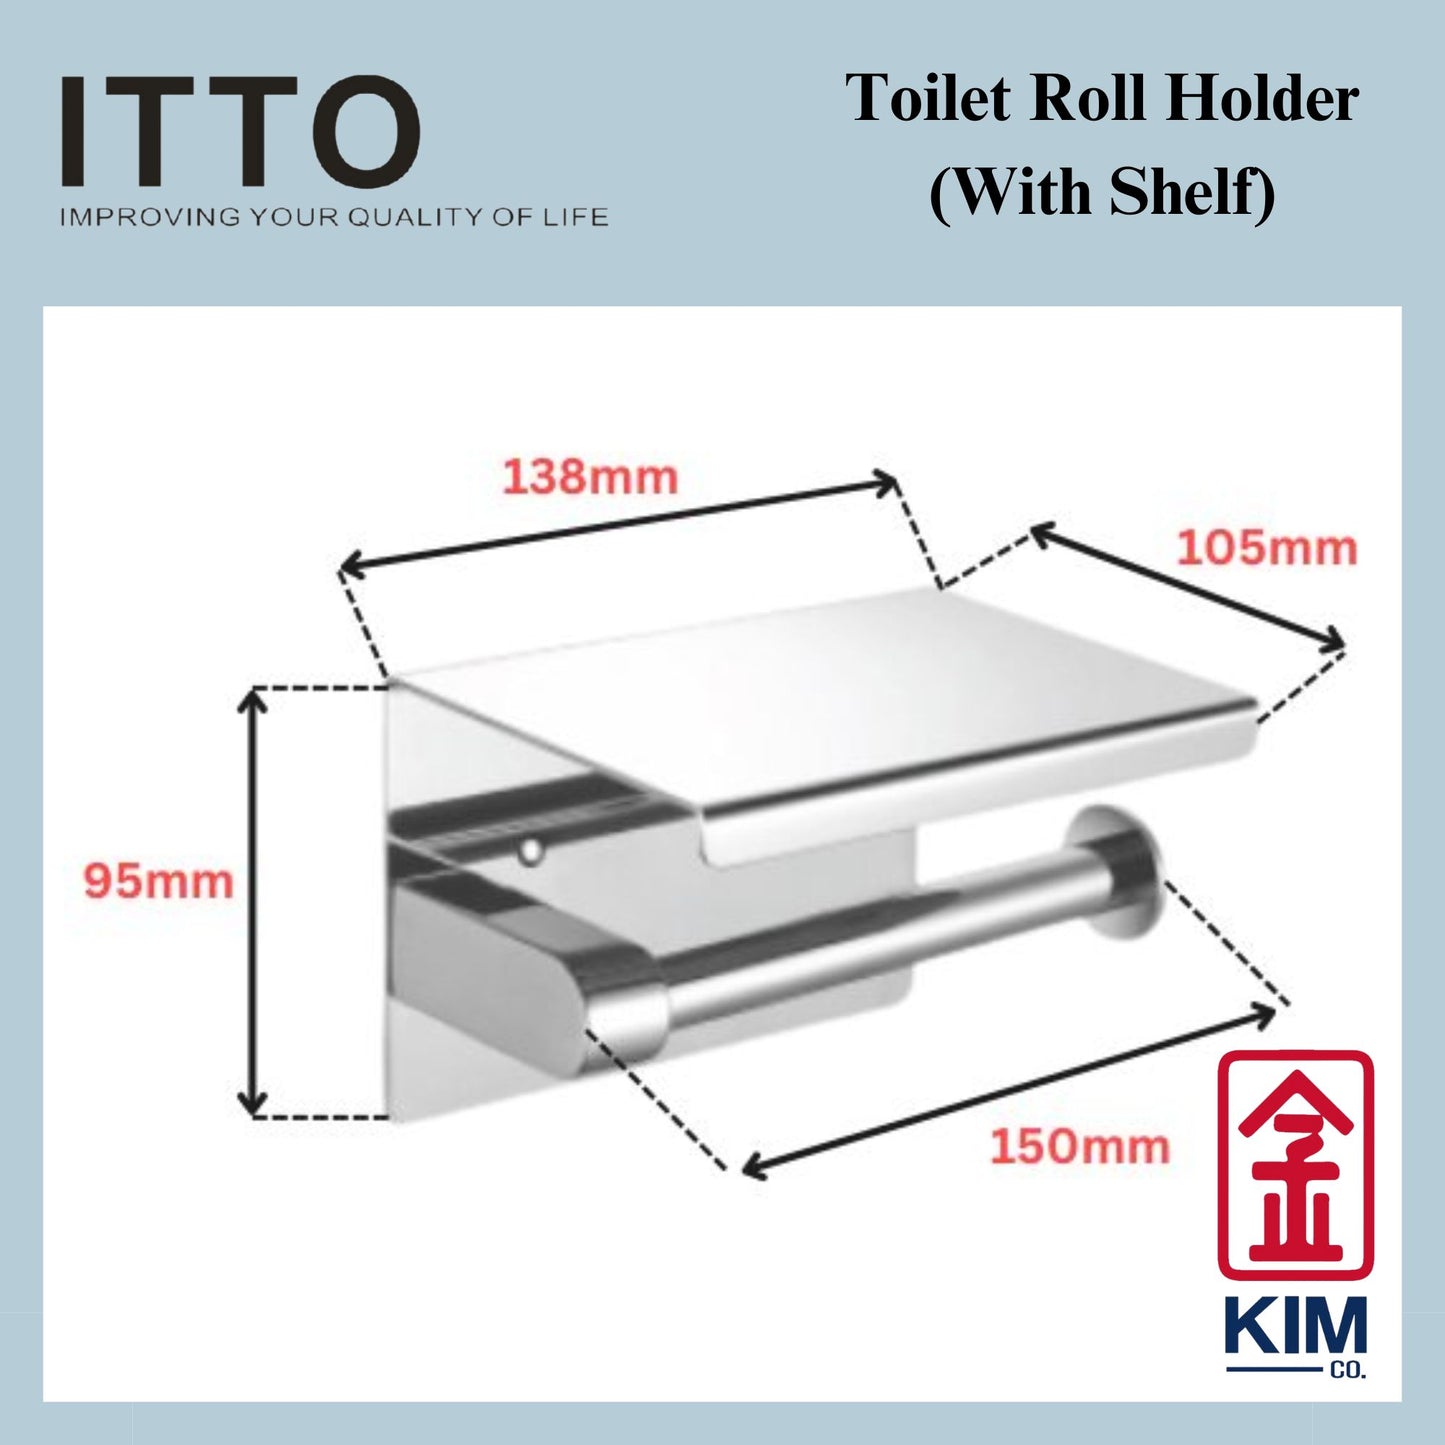 Itto Stainless Steel 304 Toilet Roll Holder With Shelf (Matt) (IT-F9056-LS)